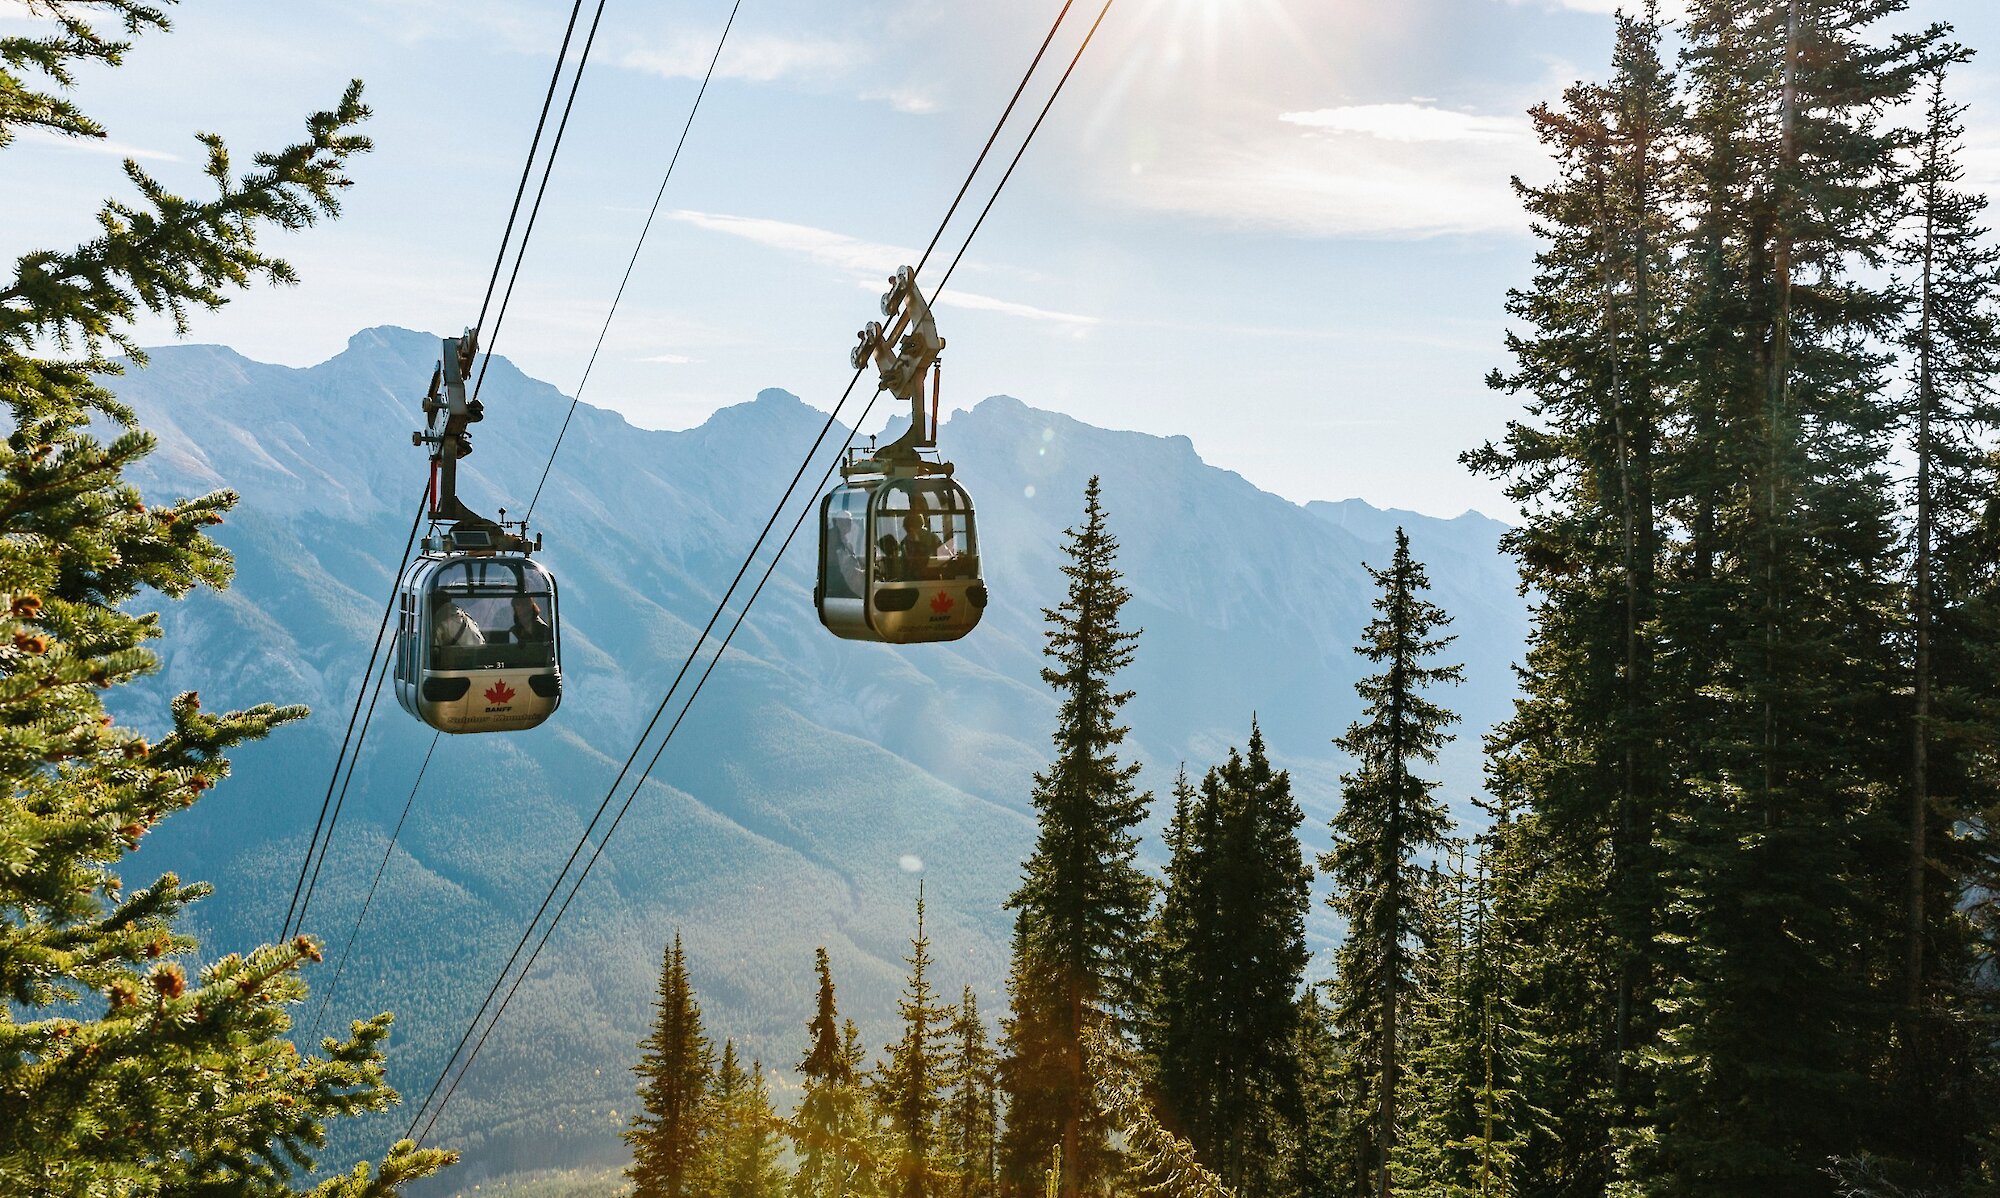 The Banff Gondola cabins riding to the top of Sulphur Mountain